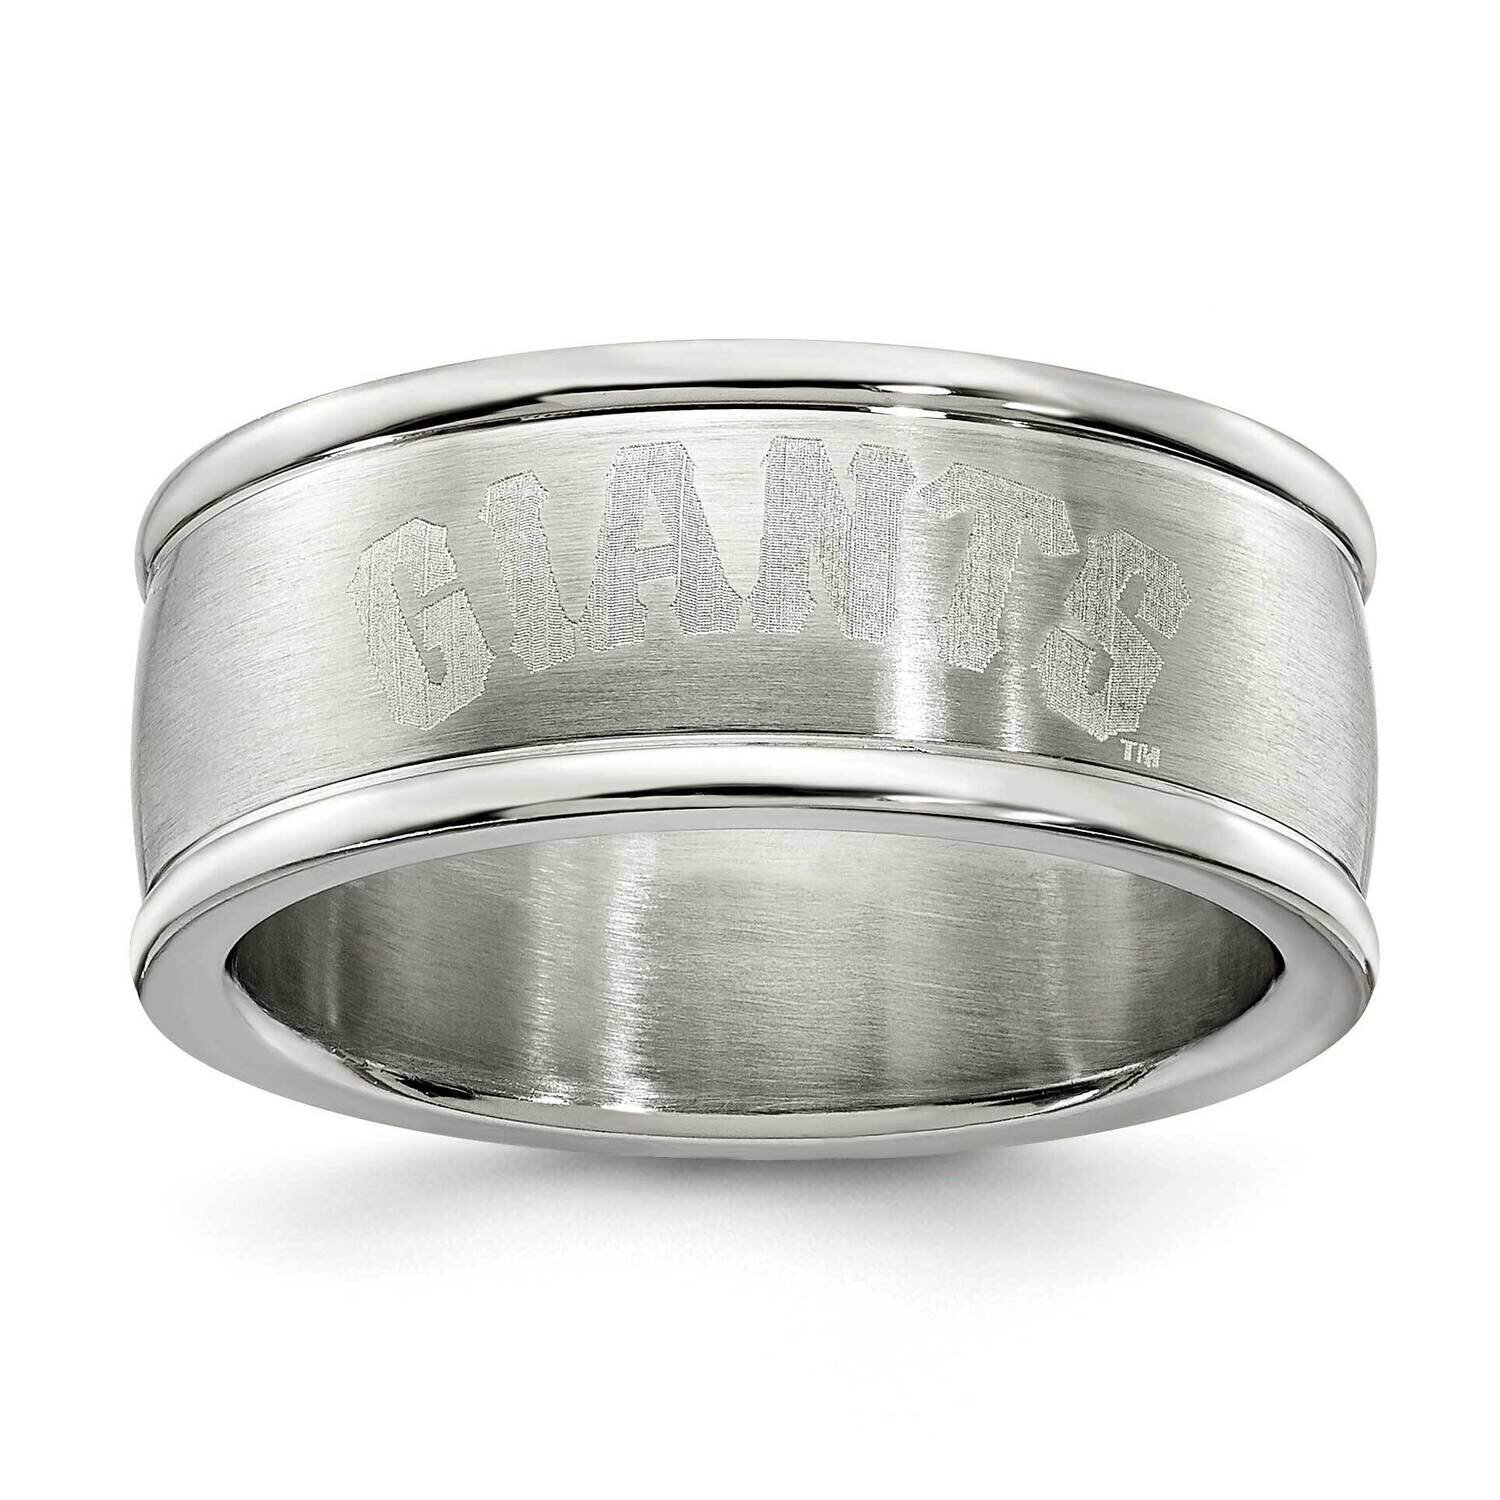 San Fran Giants Logo Band Ring Sz6 Stainless Steel GIT035-SZ6